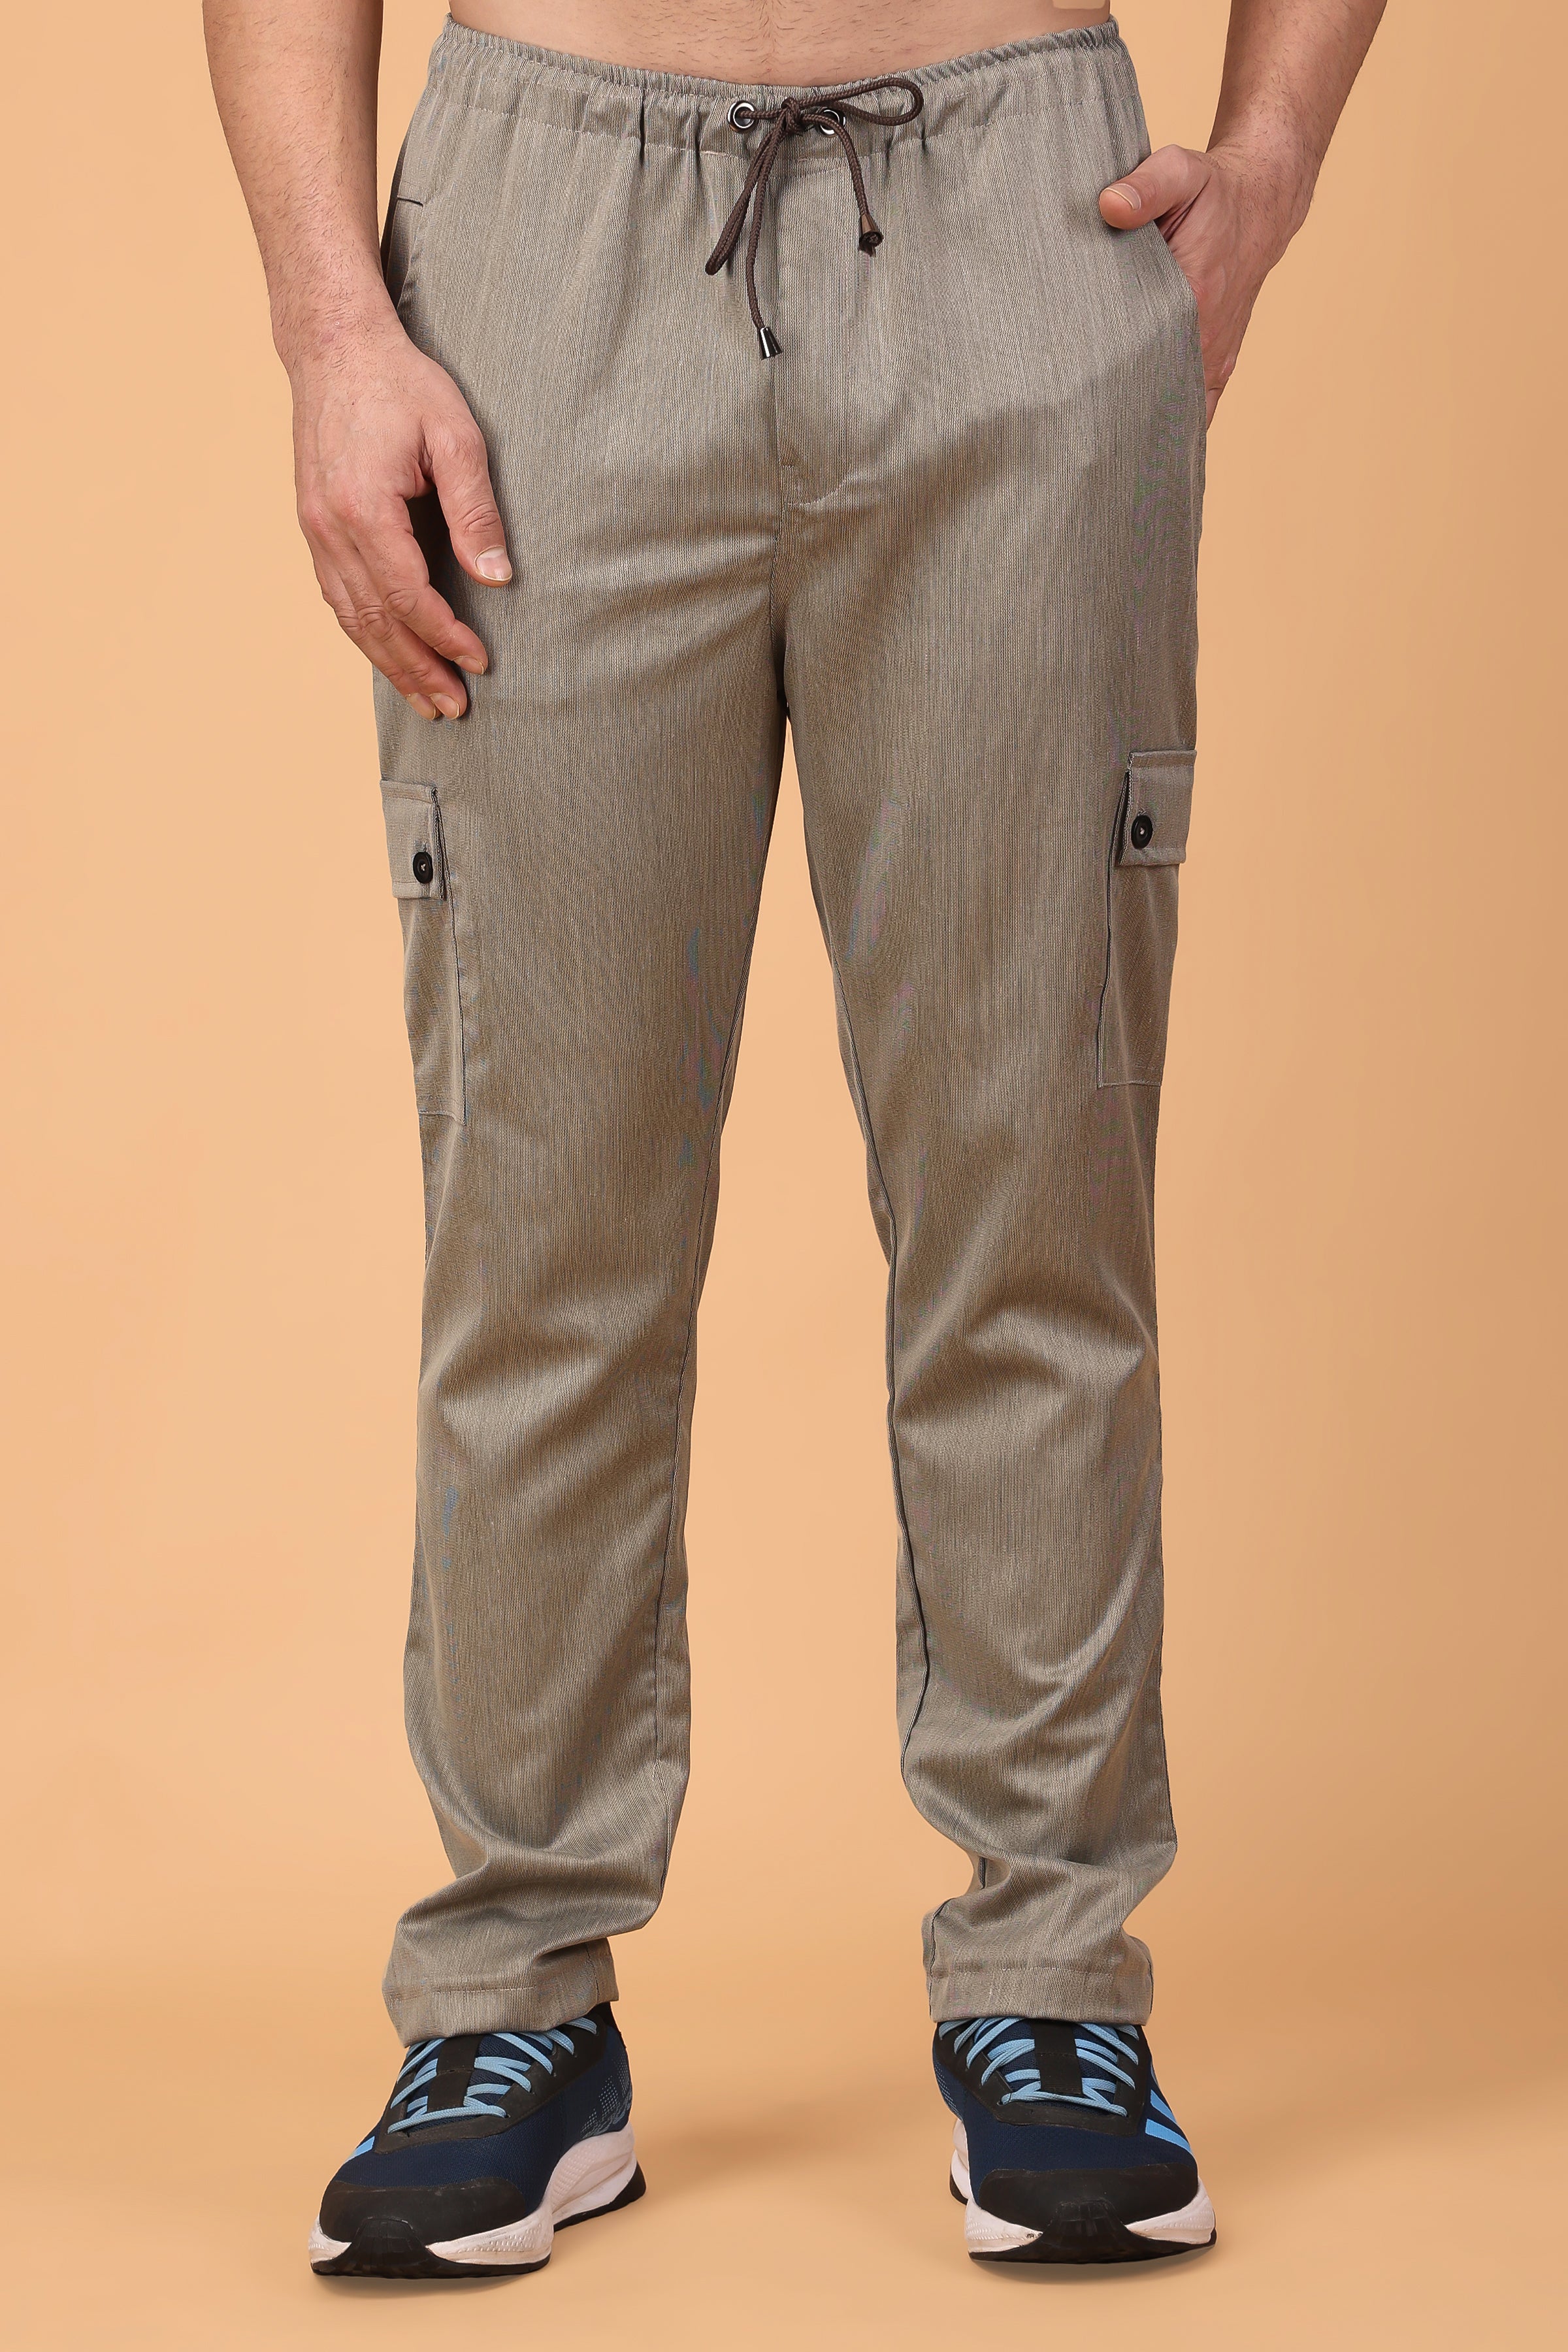 Buy Plus Size Cargo Pants For Men & Large Size Cargo Pants - Apella